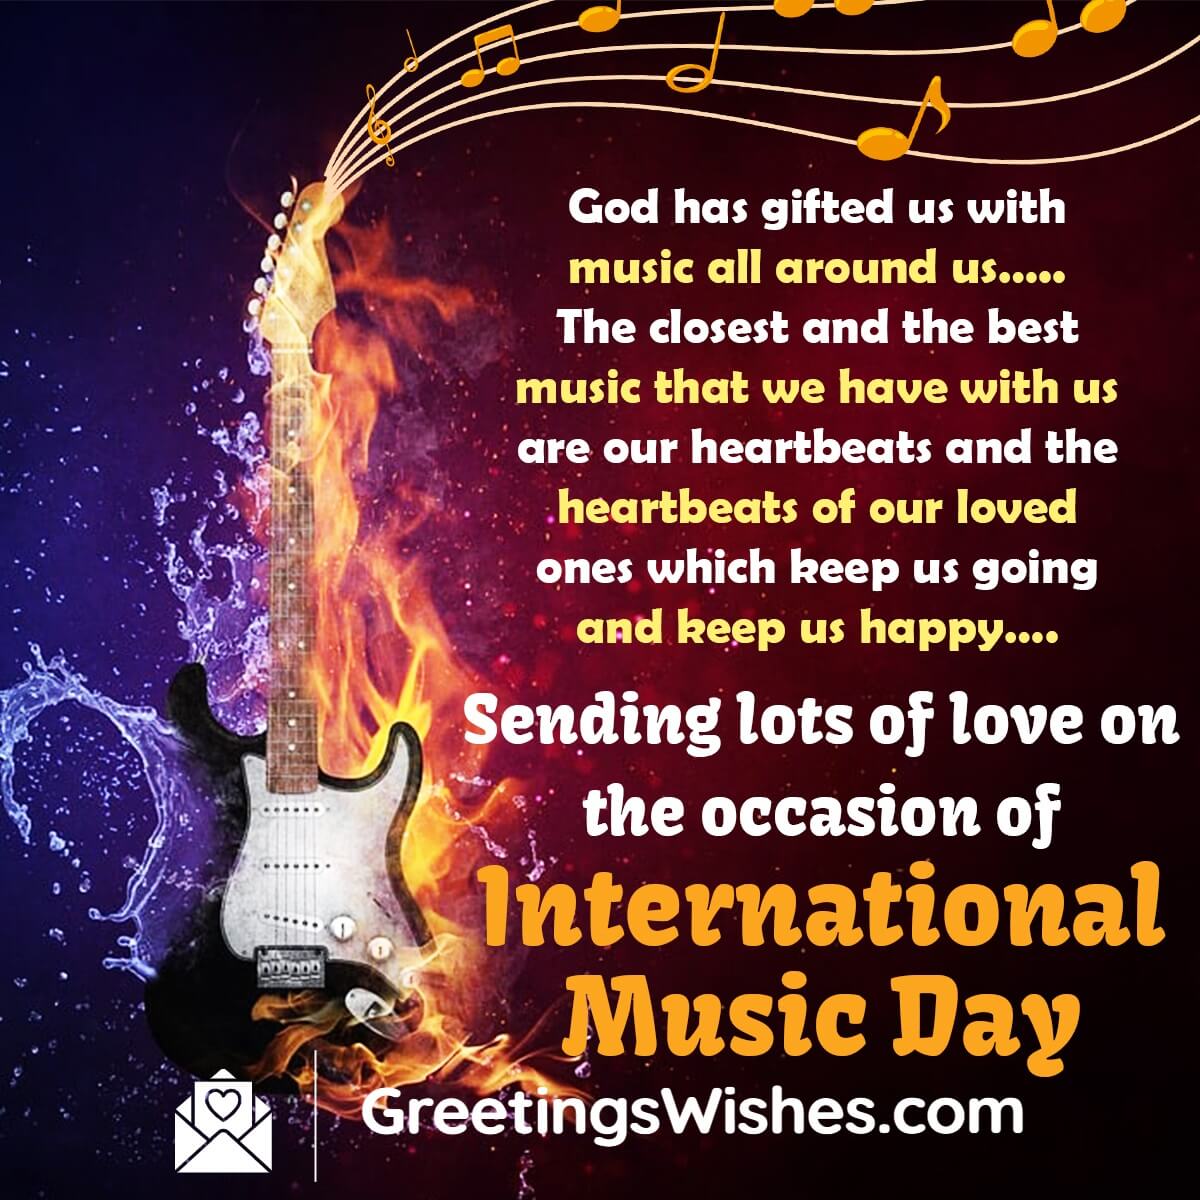 International Music Day Message